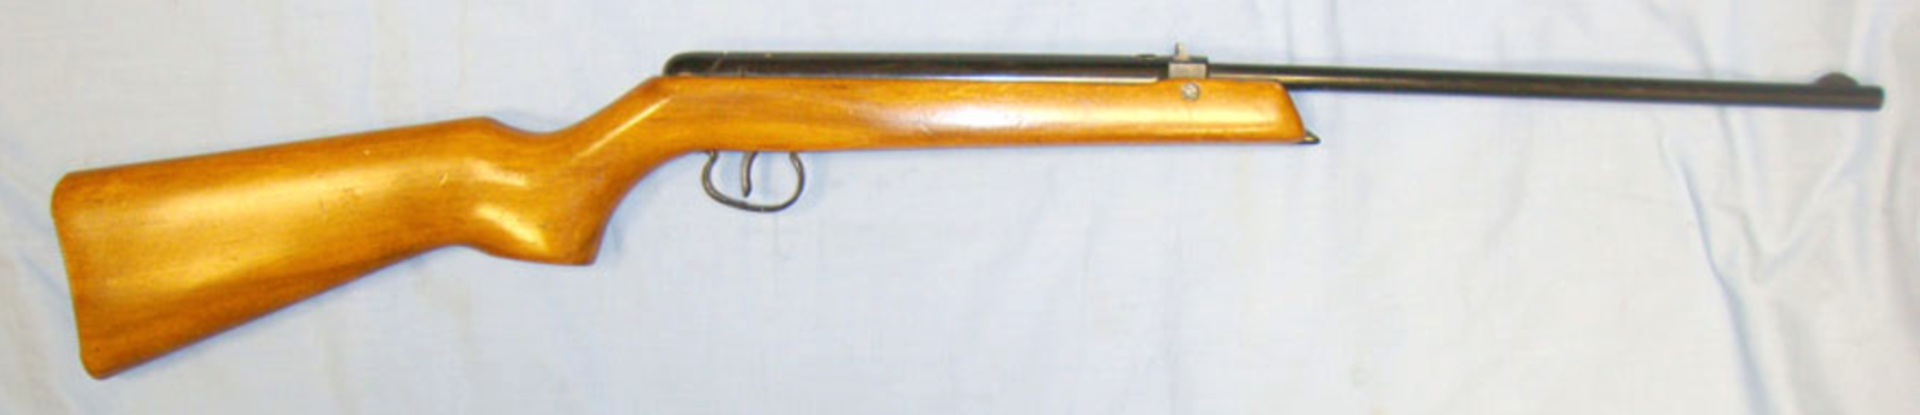 1964-1968 B.S.A Merlin .22 Calibre Under Lever Air Rifle. Sn 9602. 9602 Birmingham Small Arms